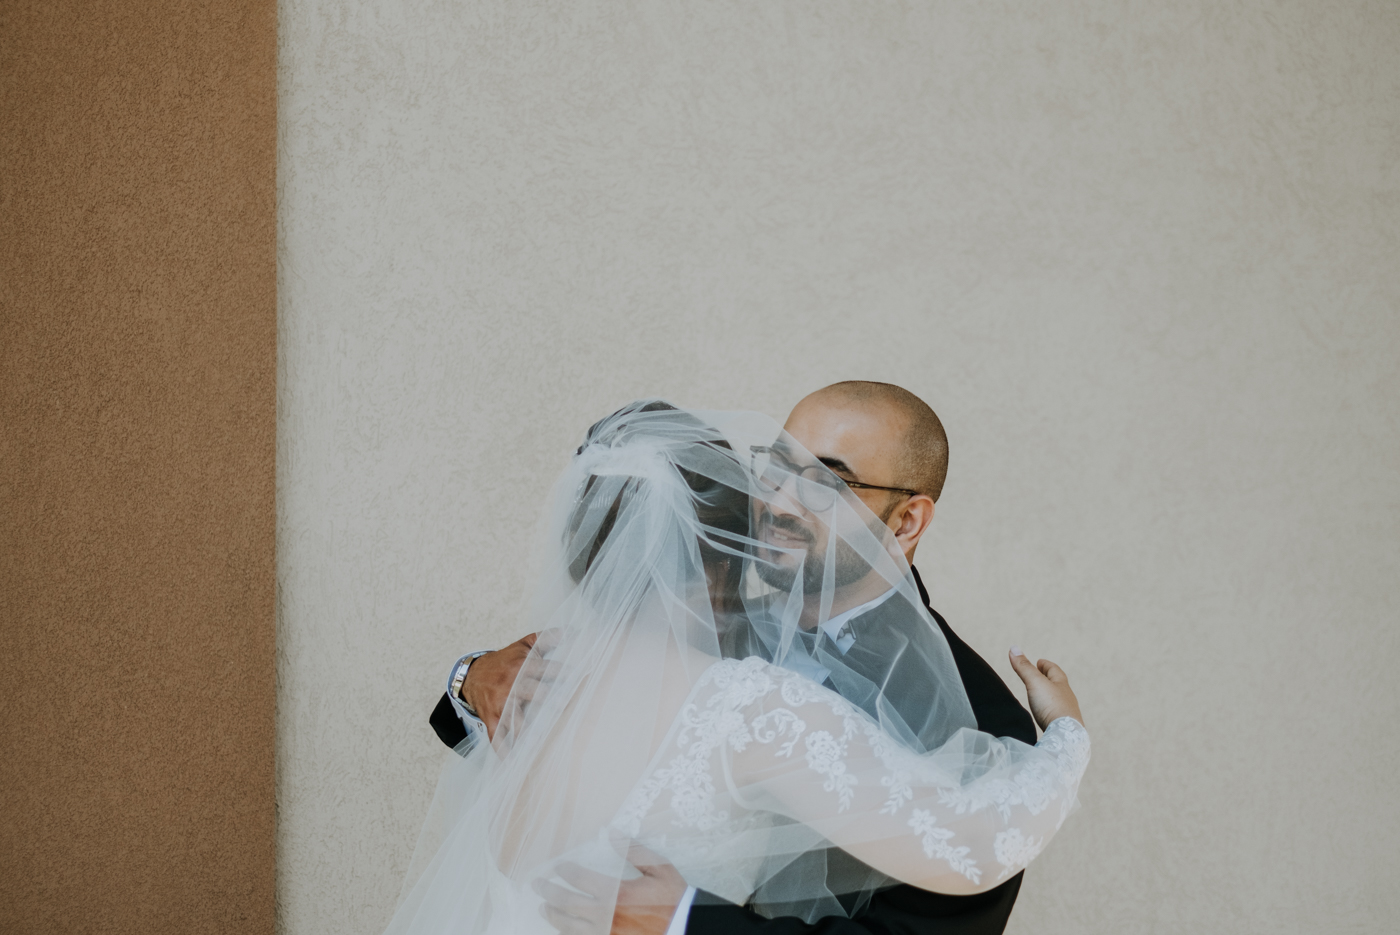 tampa wedding photography | brooklyn wedding photography | noura + amr